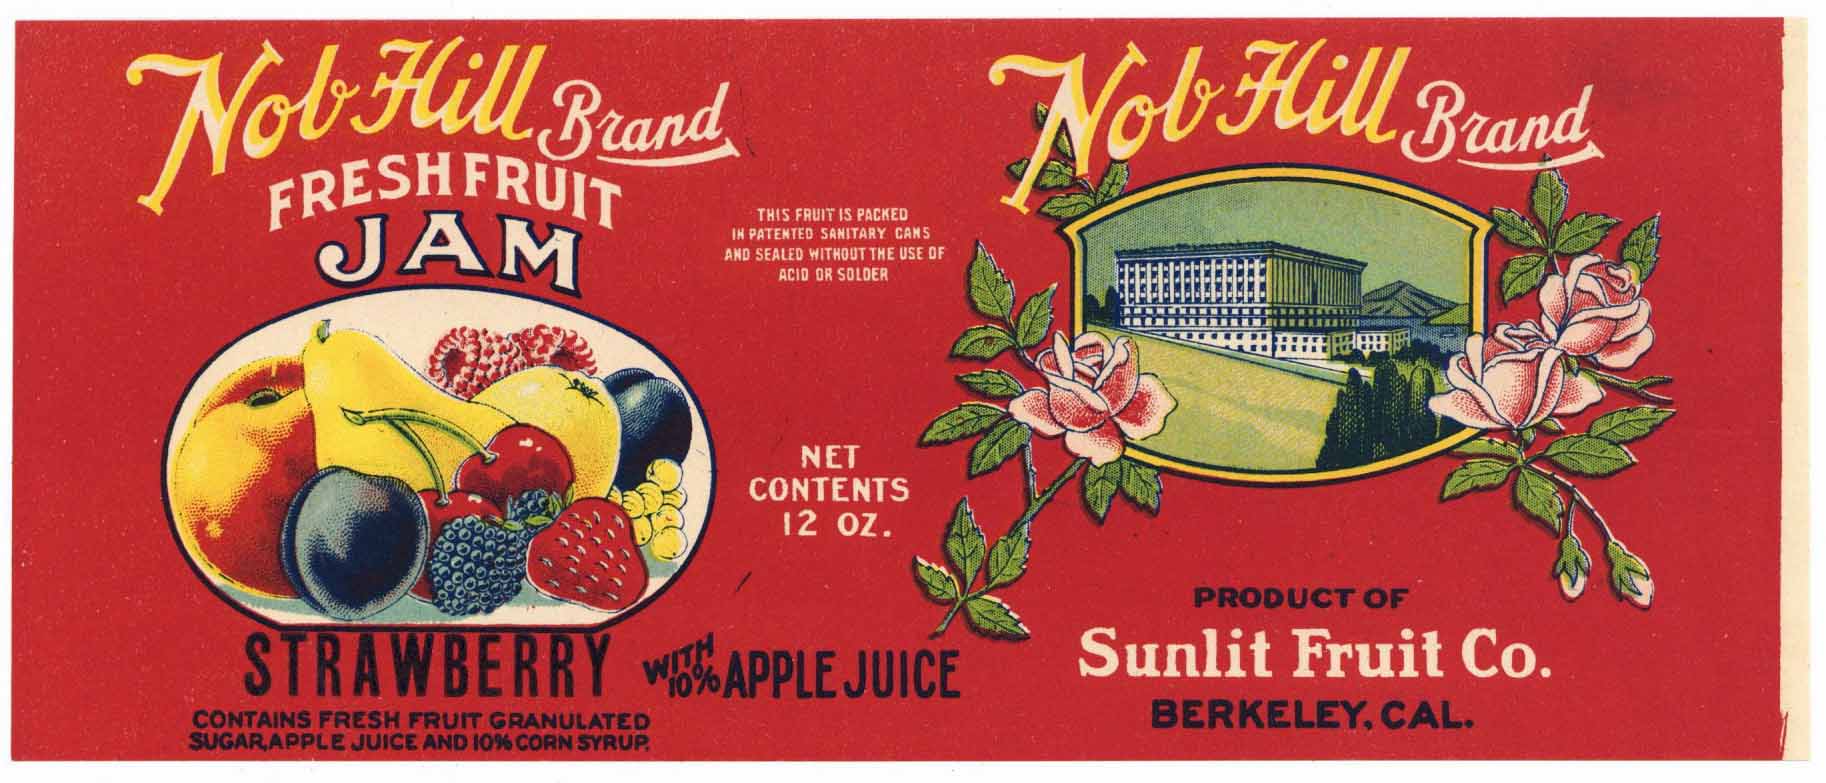 Nob Hill Brand Vintage Strawberry Jam Can Label